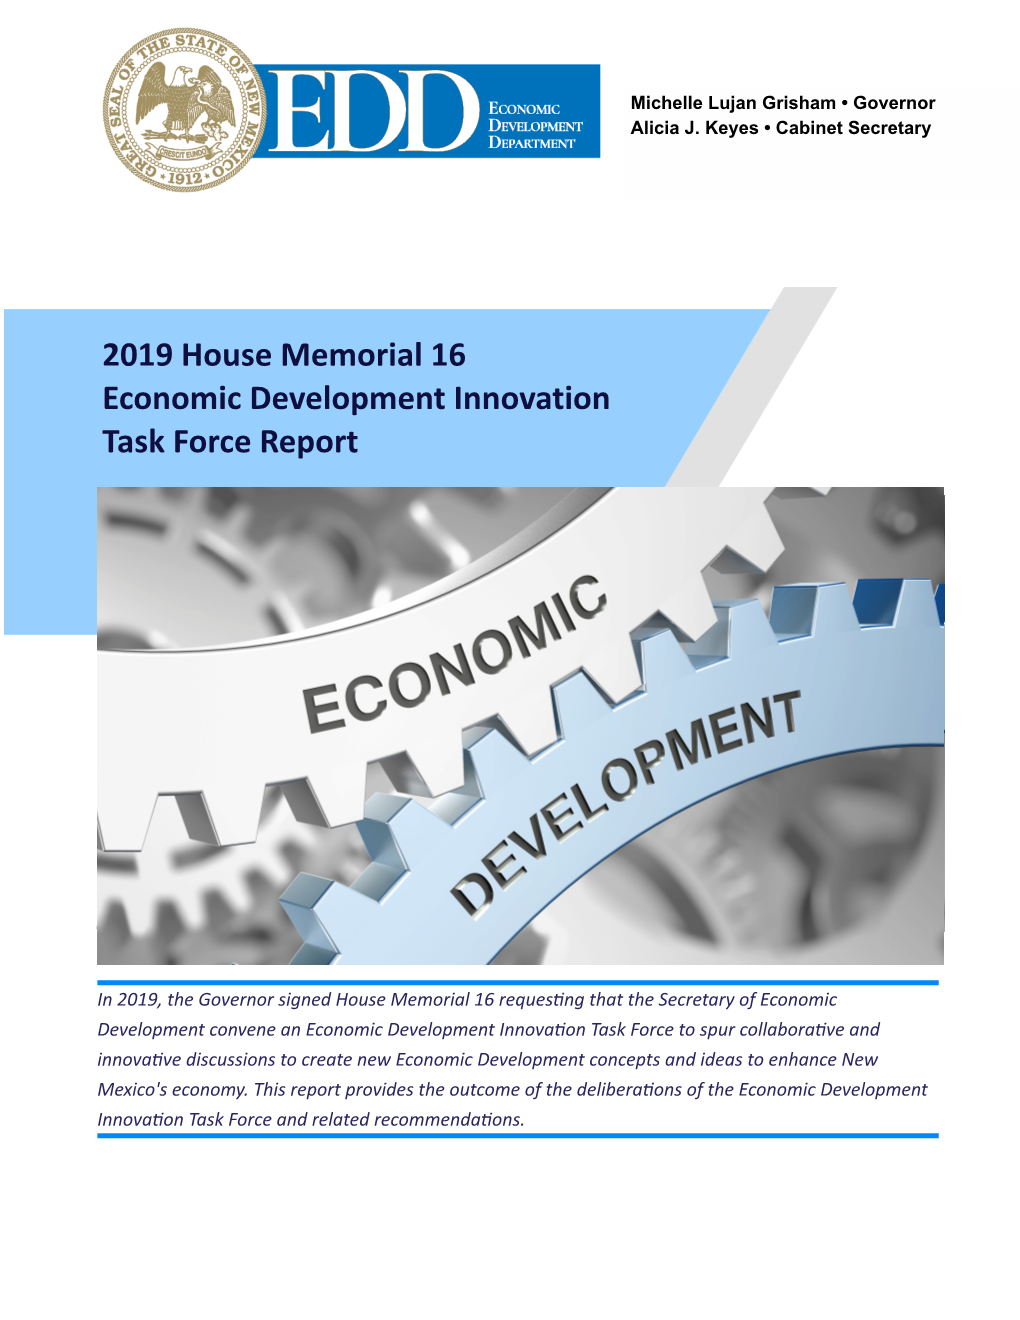 2019 House Memorial 16 Economic Development Innovation Task Force Report